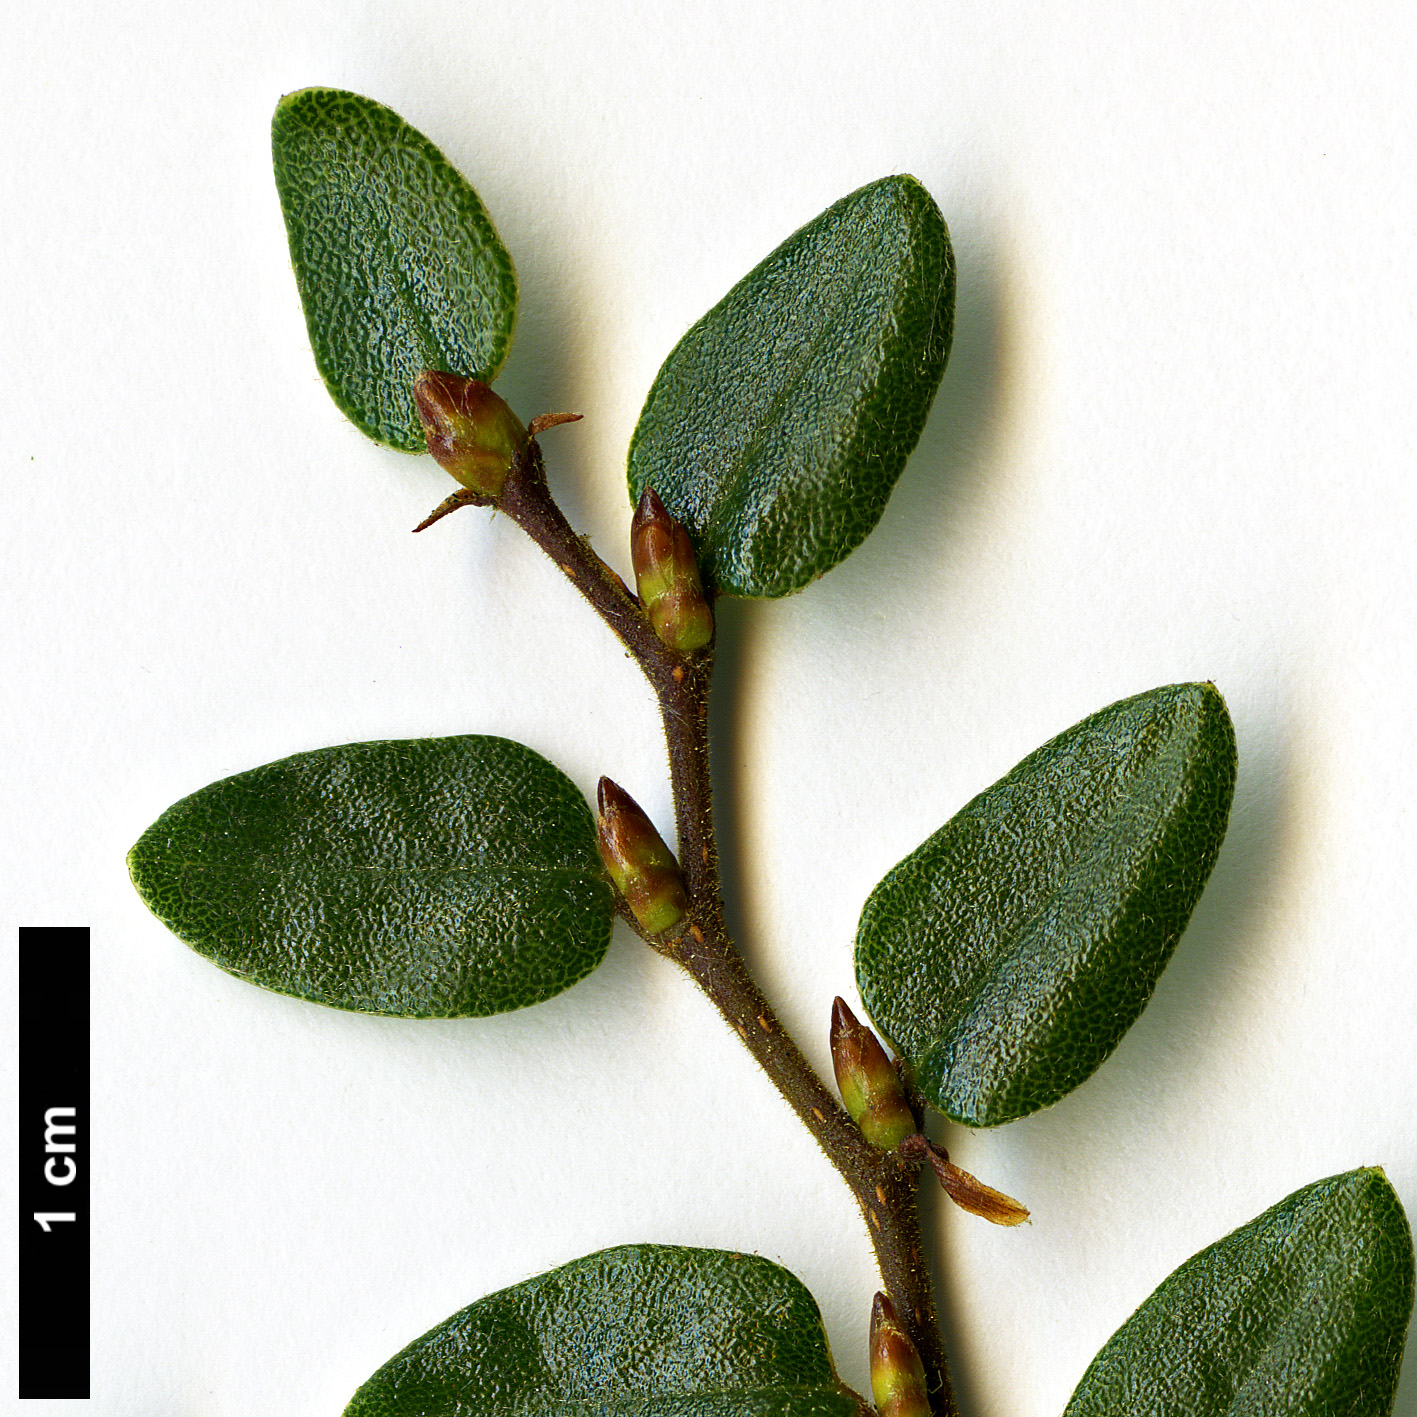 High resolution image: Family: Nothofagaceae - Genus: Nothofagus - Taxon: solanderi - SpeciesSub: var. cliffortioides